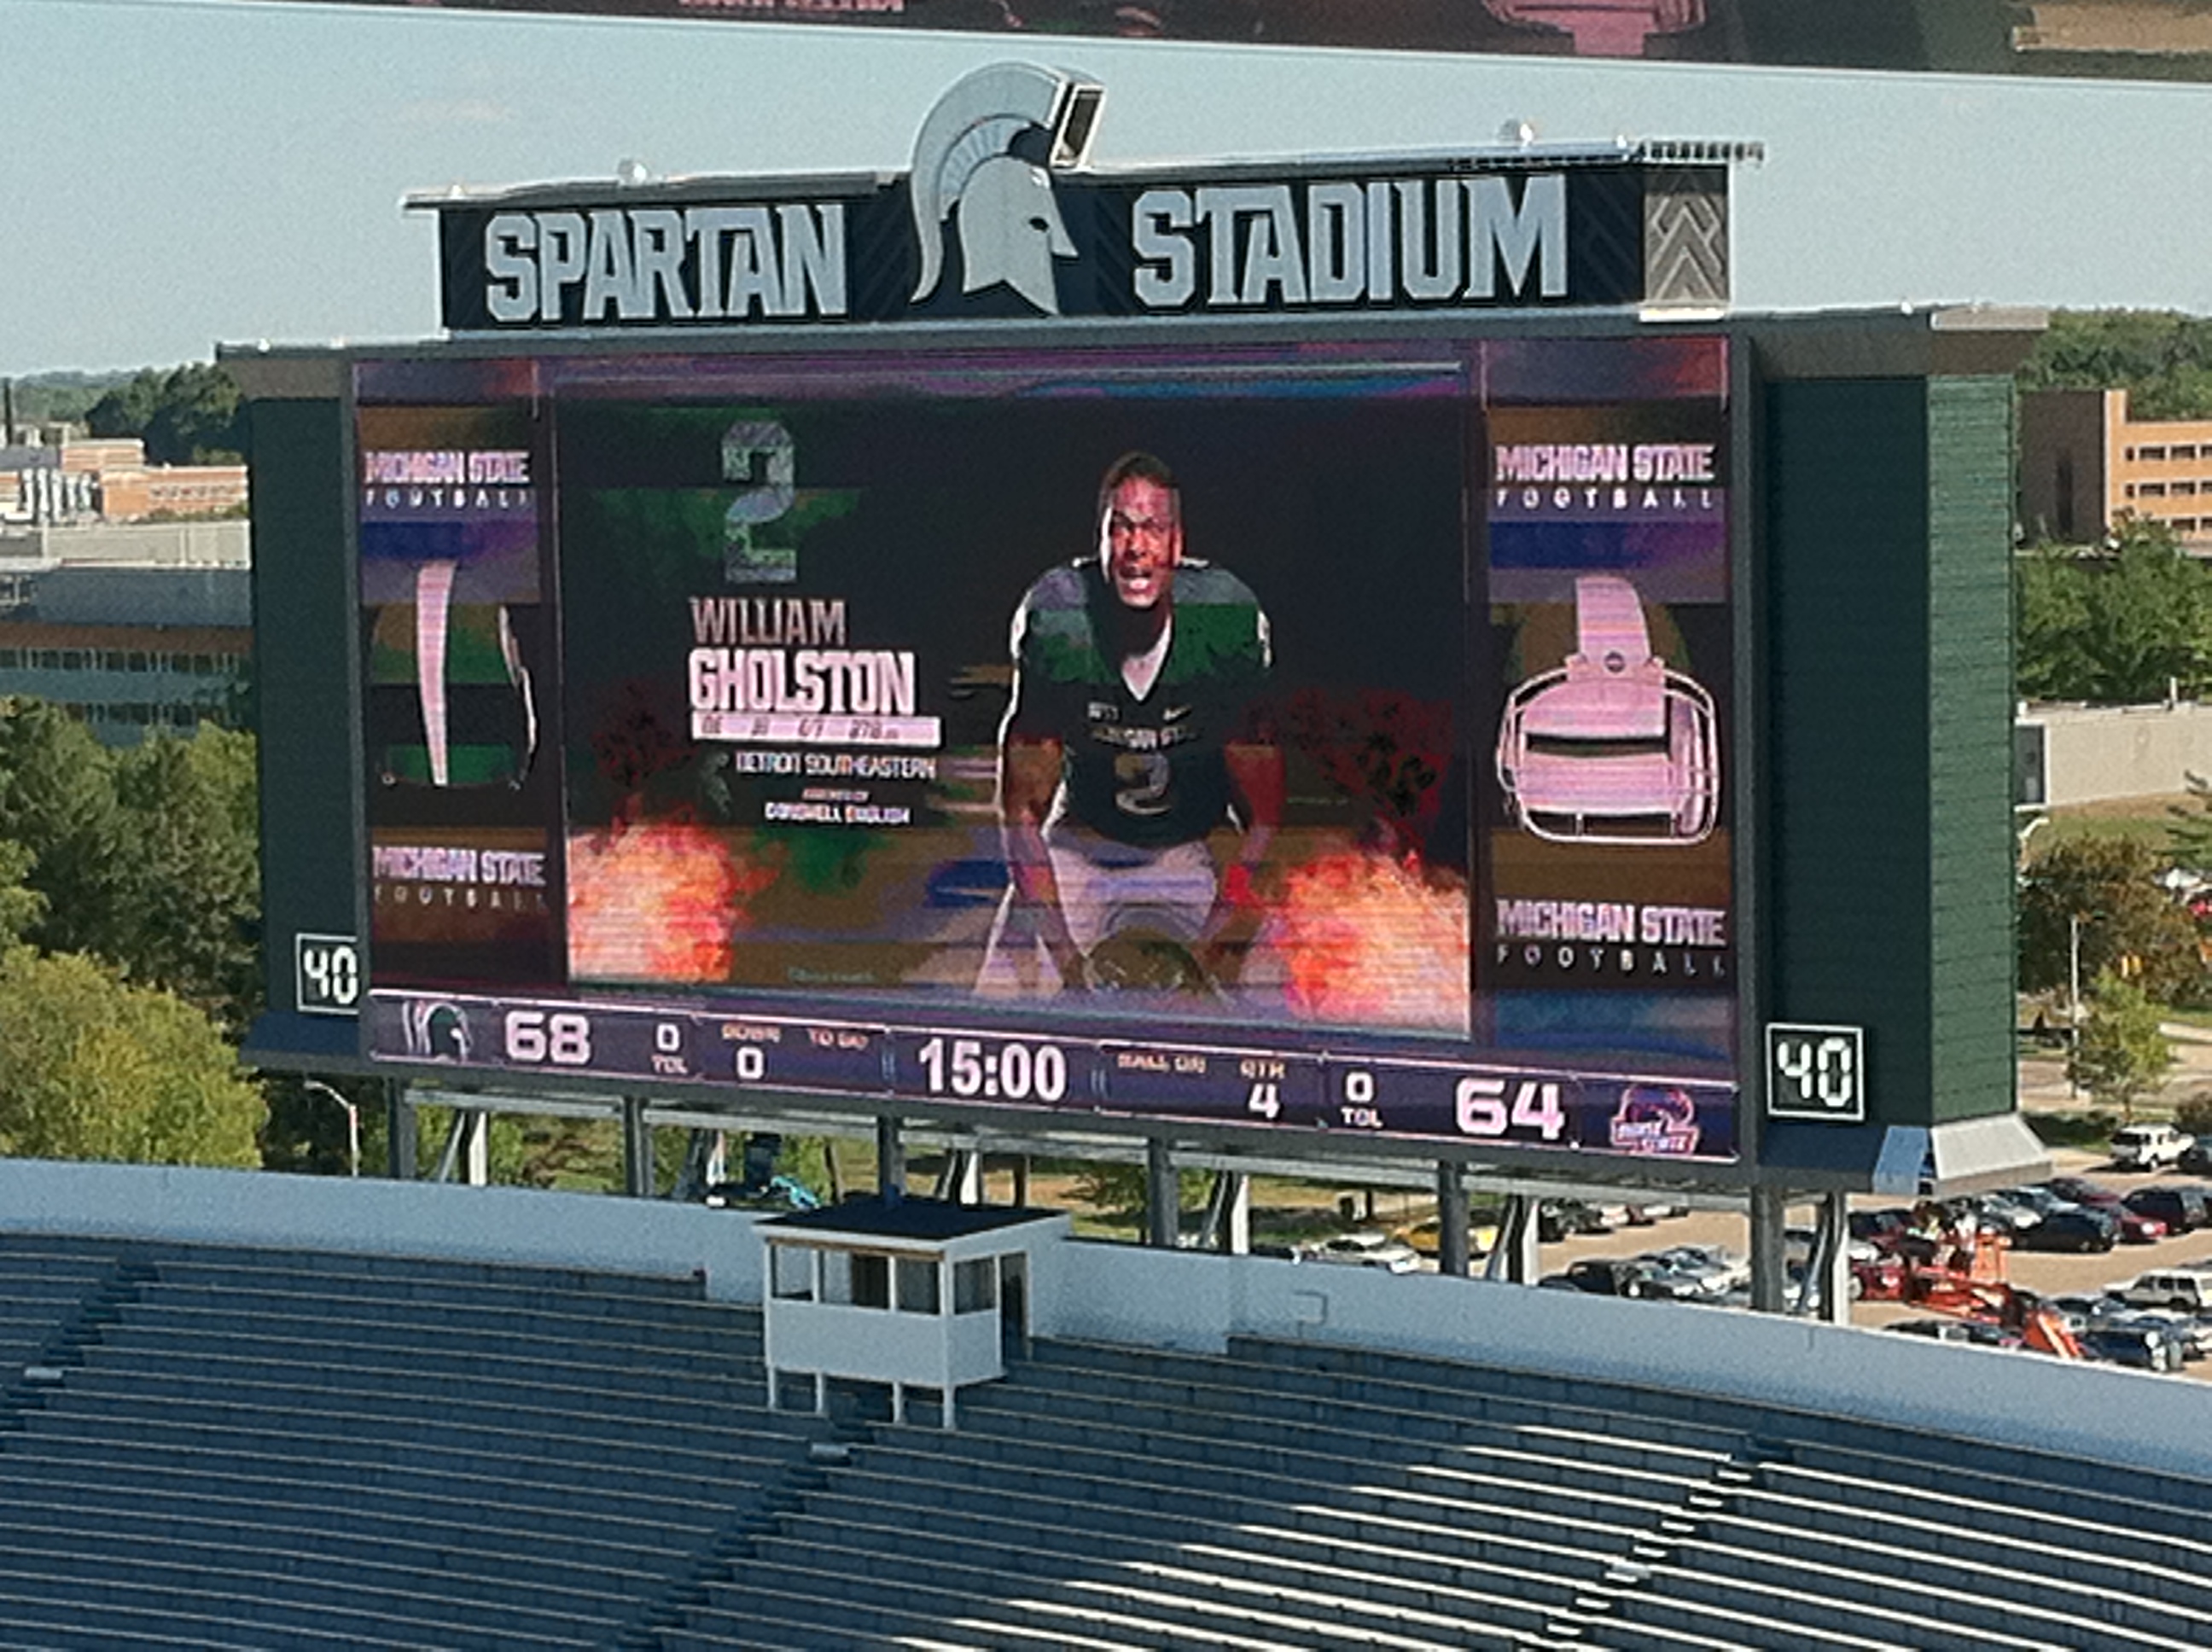 Spartan Stadium Scoreboard